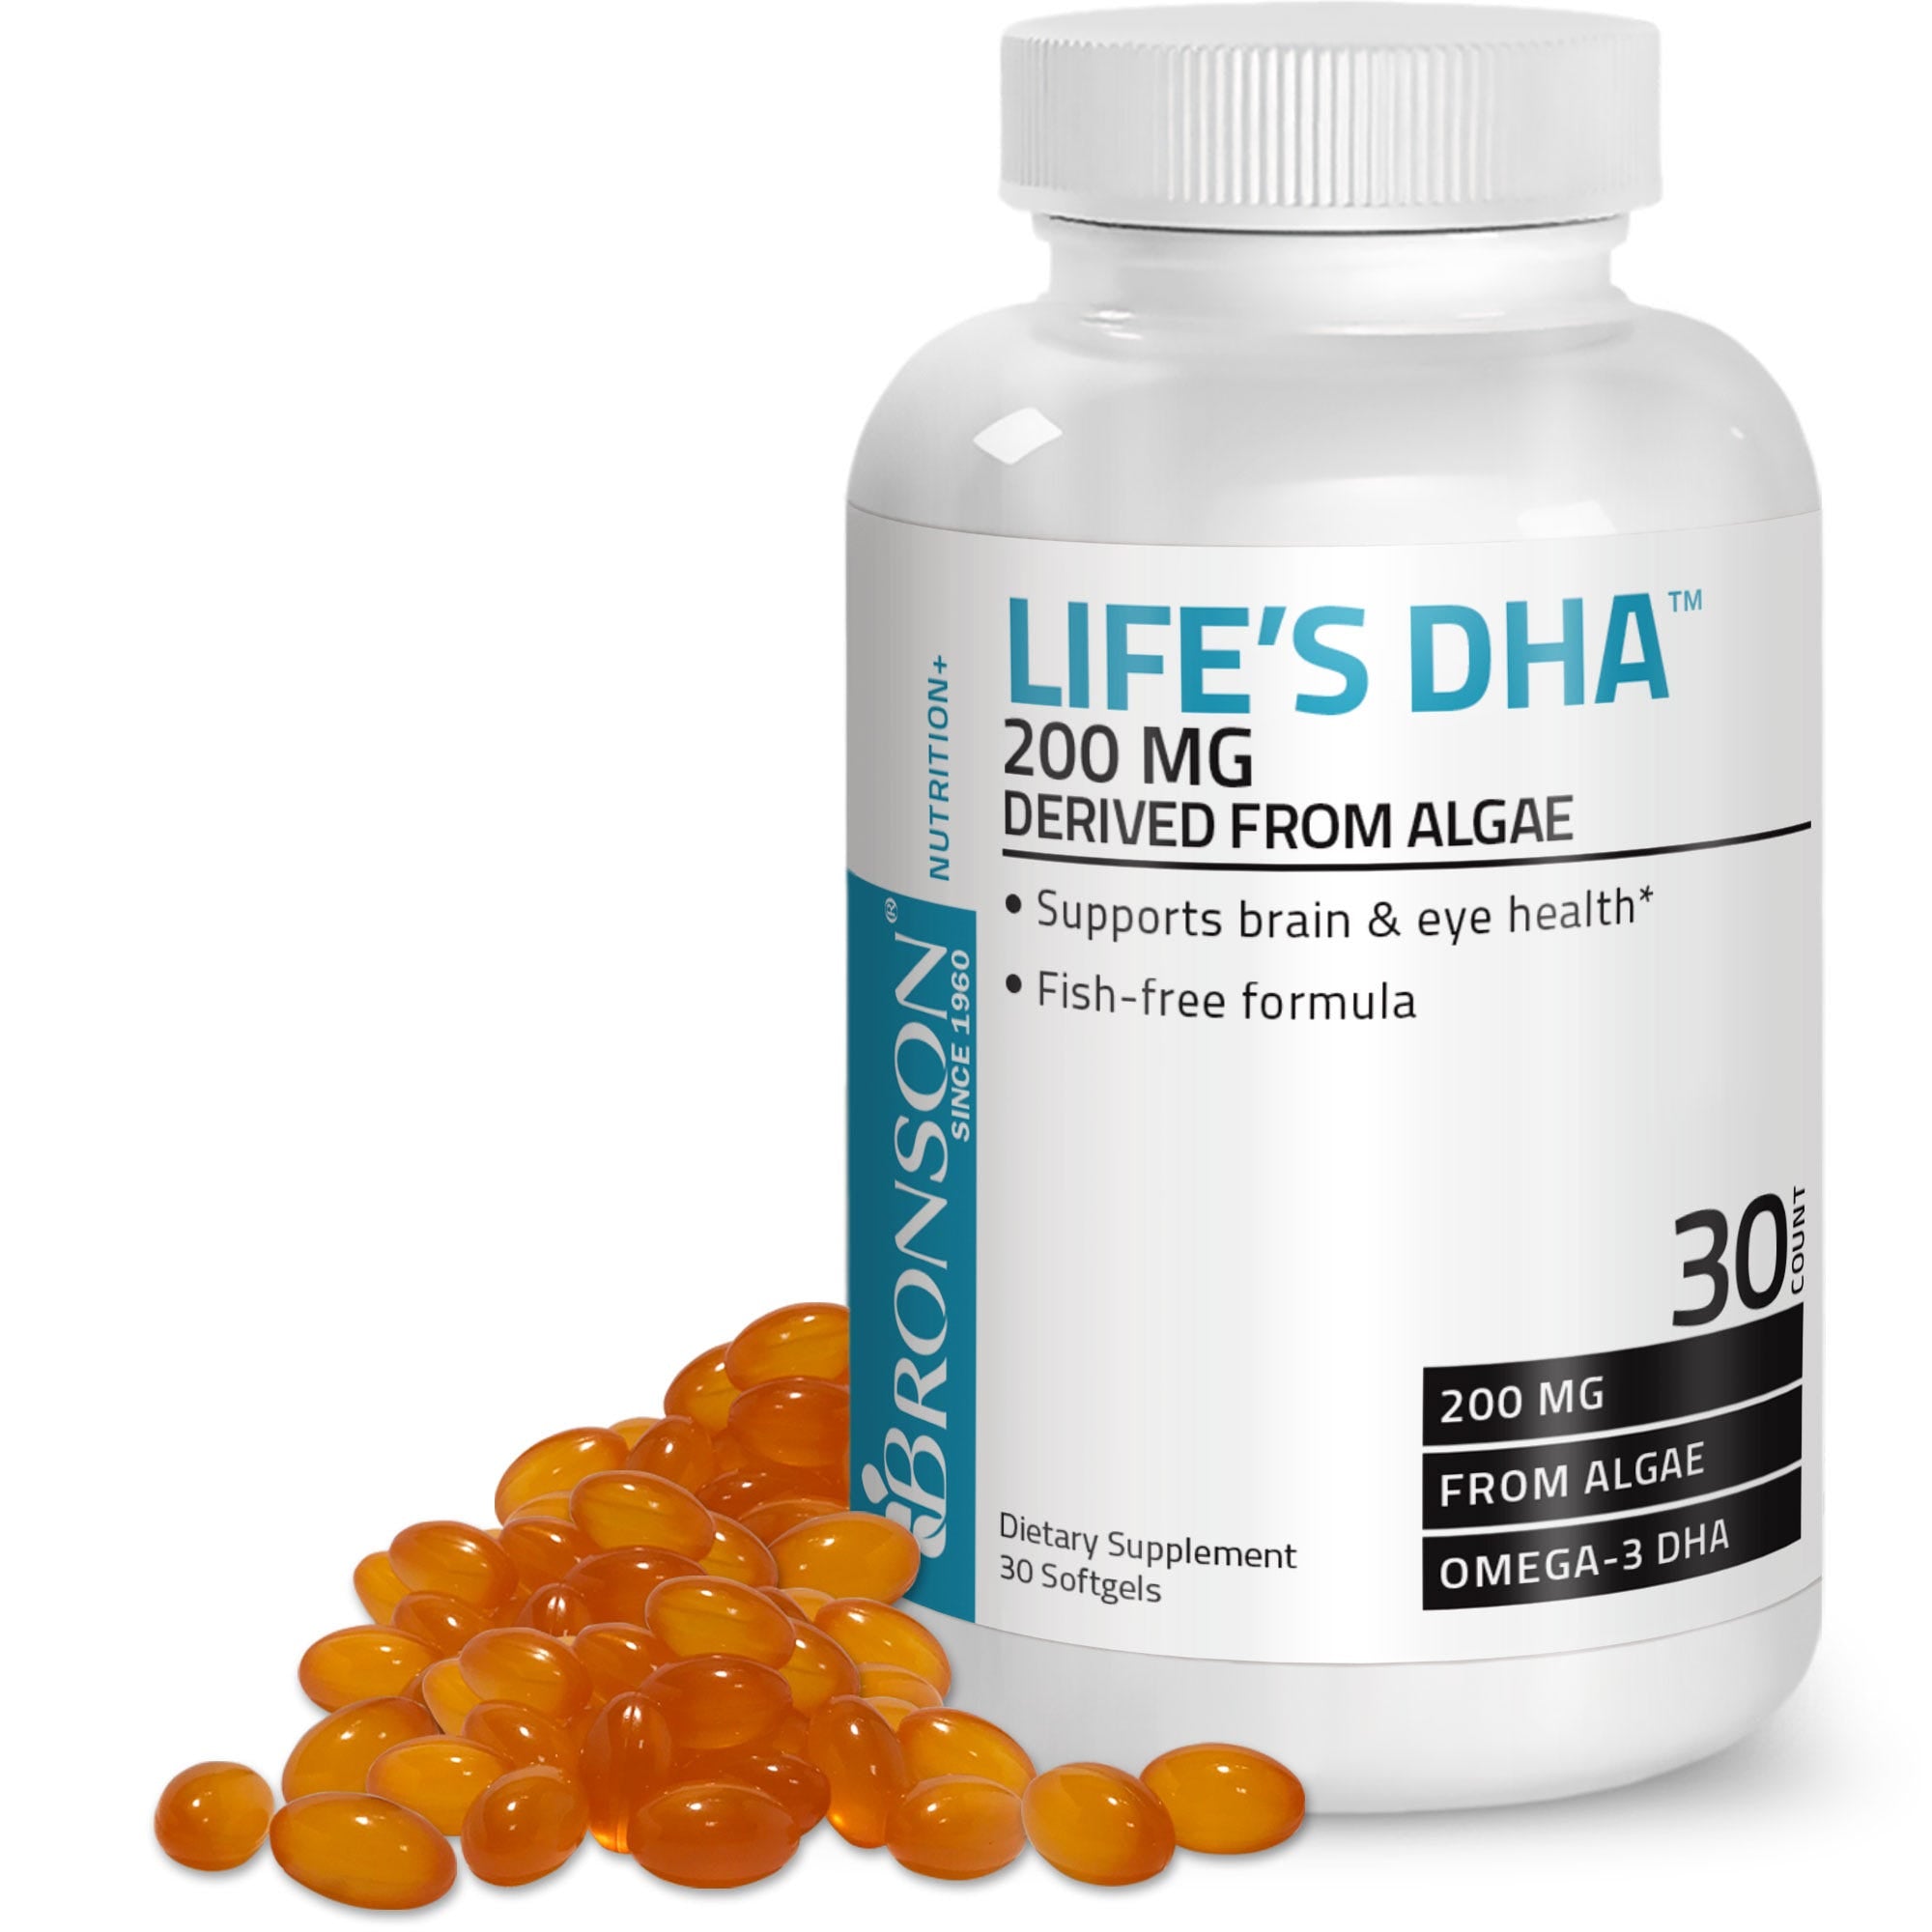 Life's DHA™ Vegetarian Derived from Algae - 200 mg - 30 Softgels